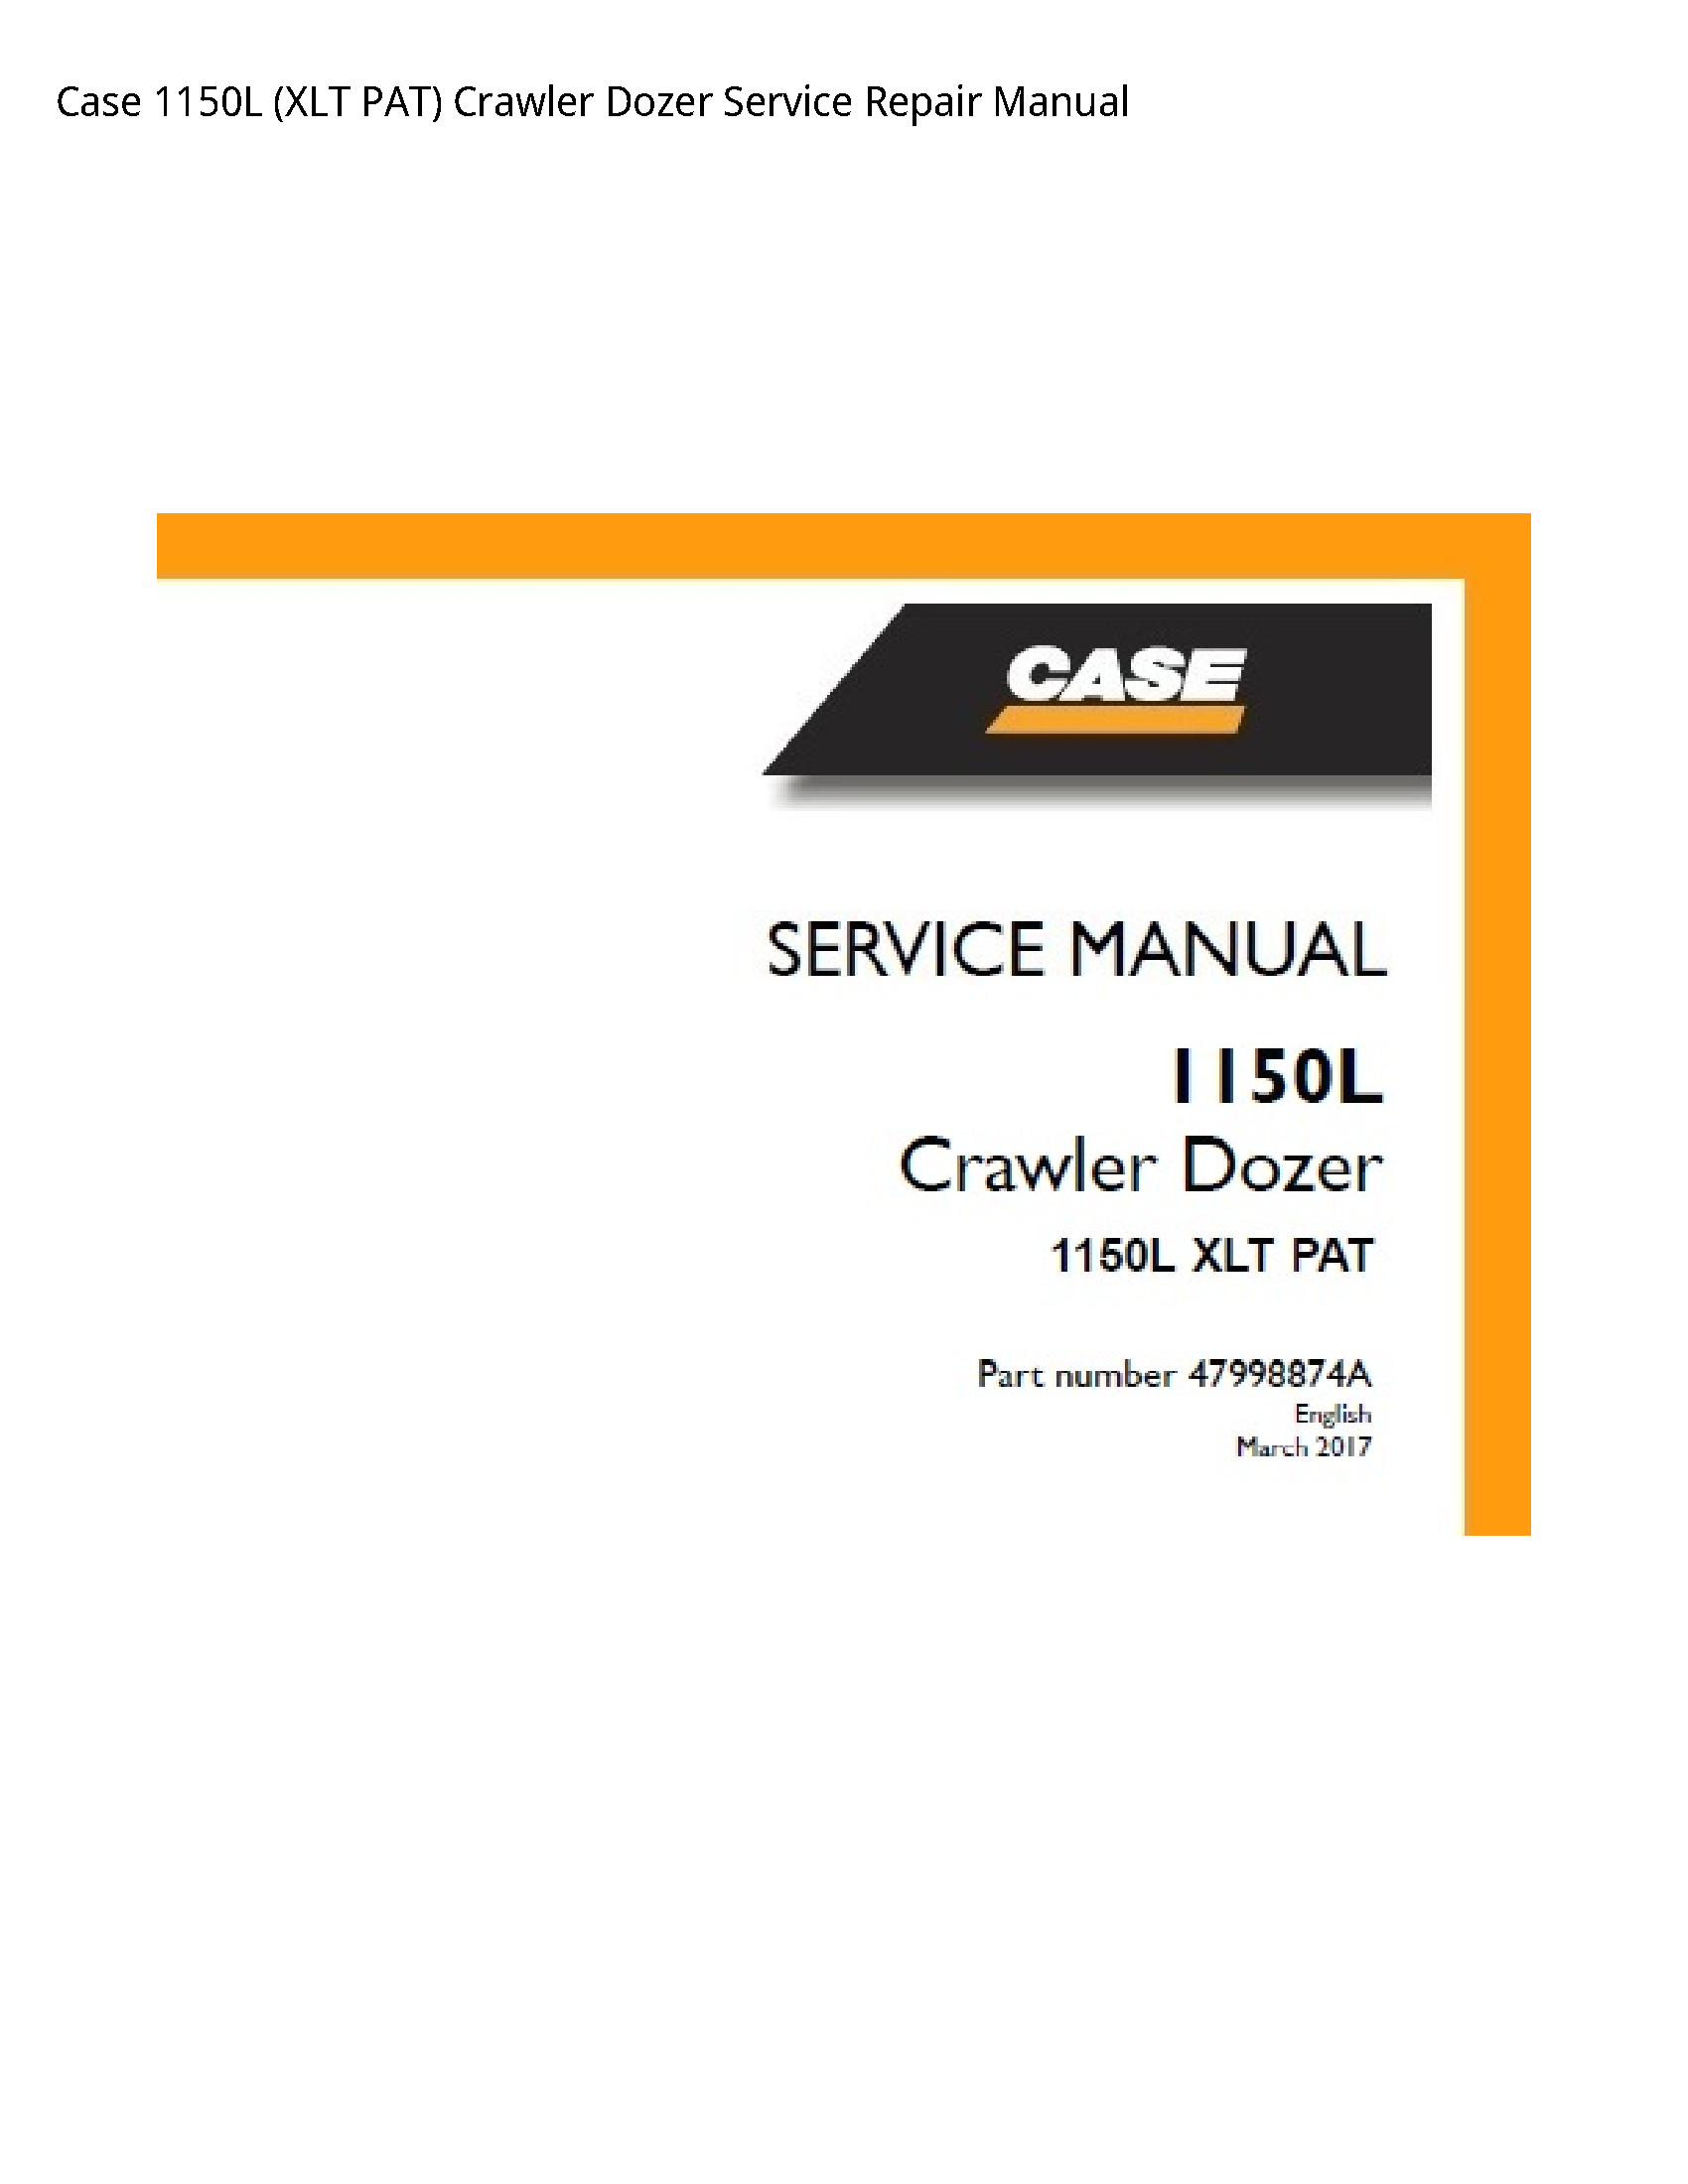 Case/Case IH 1150L (XLT PAT) Crawler Dozer manual